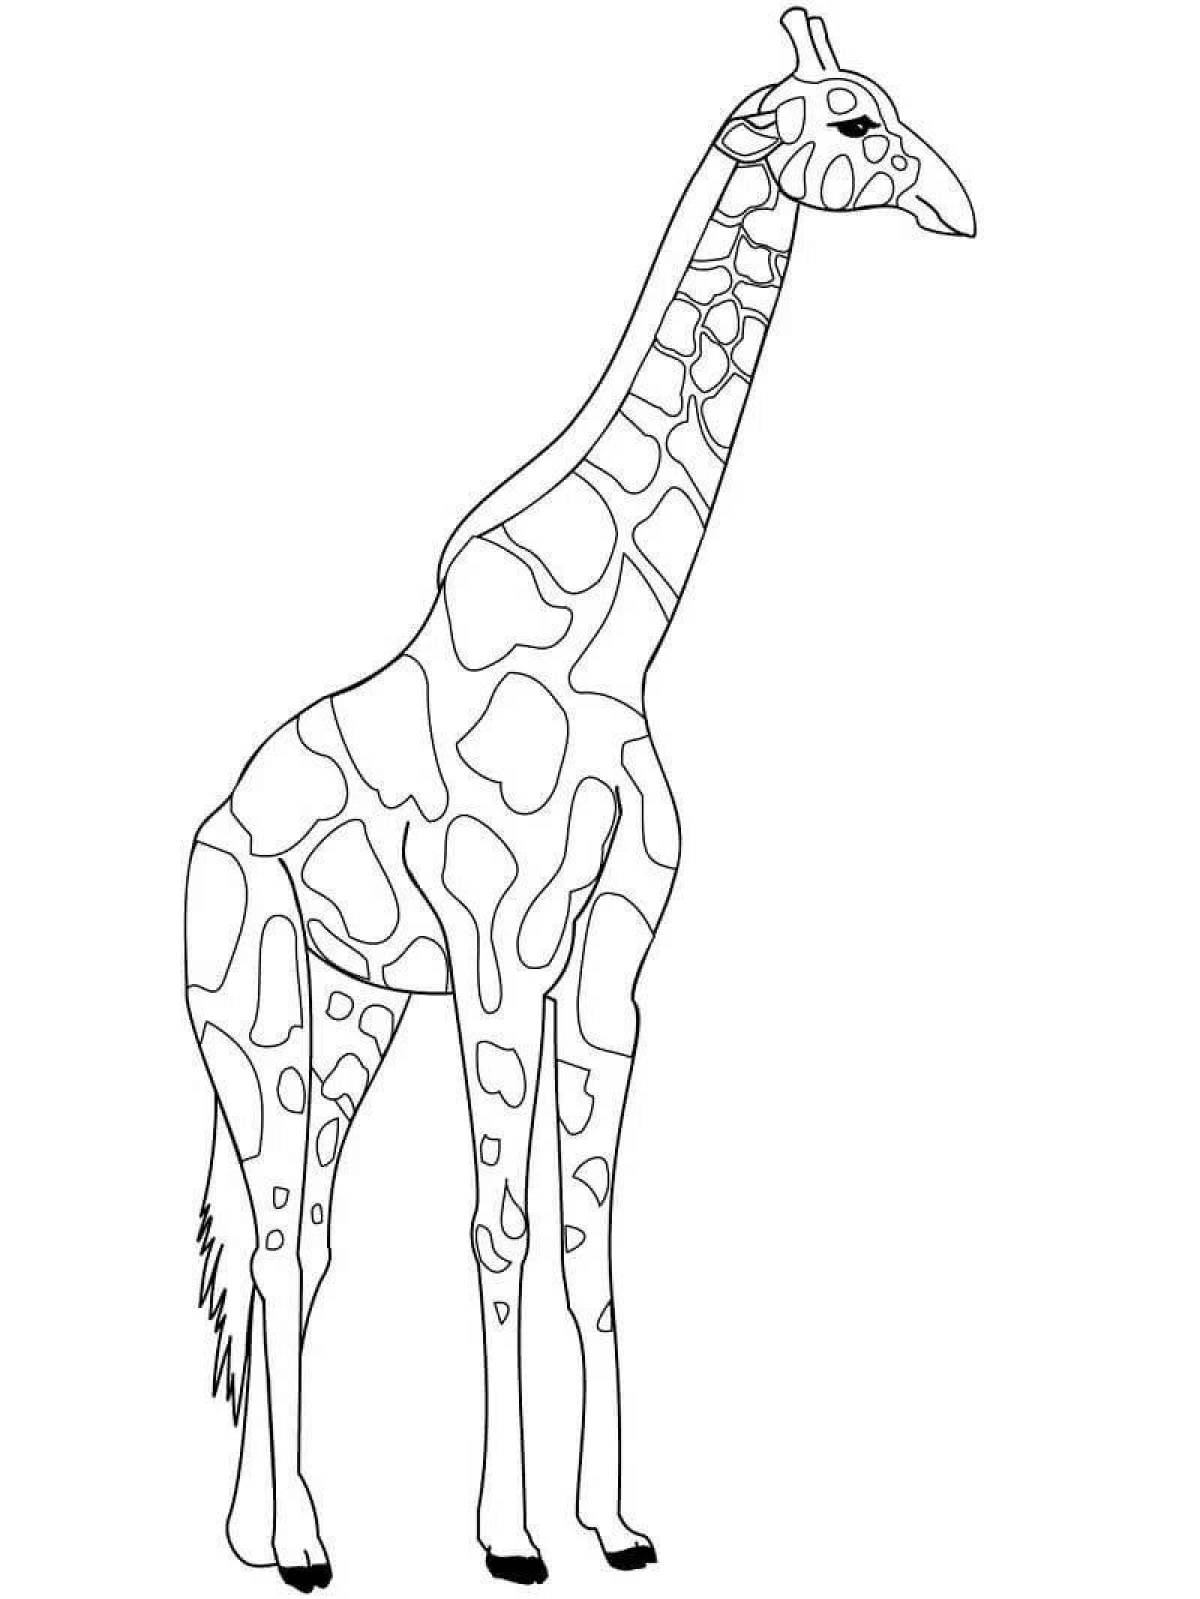 Exquisite giraffe pattern for kids